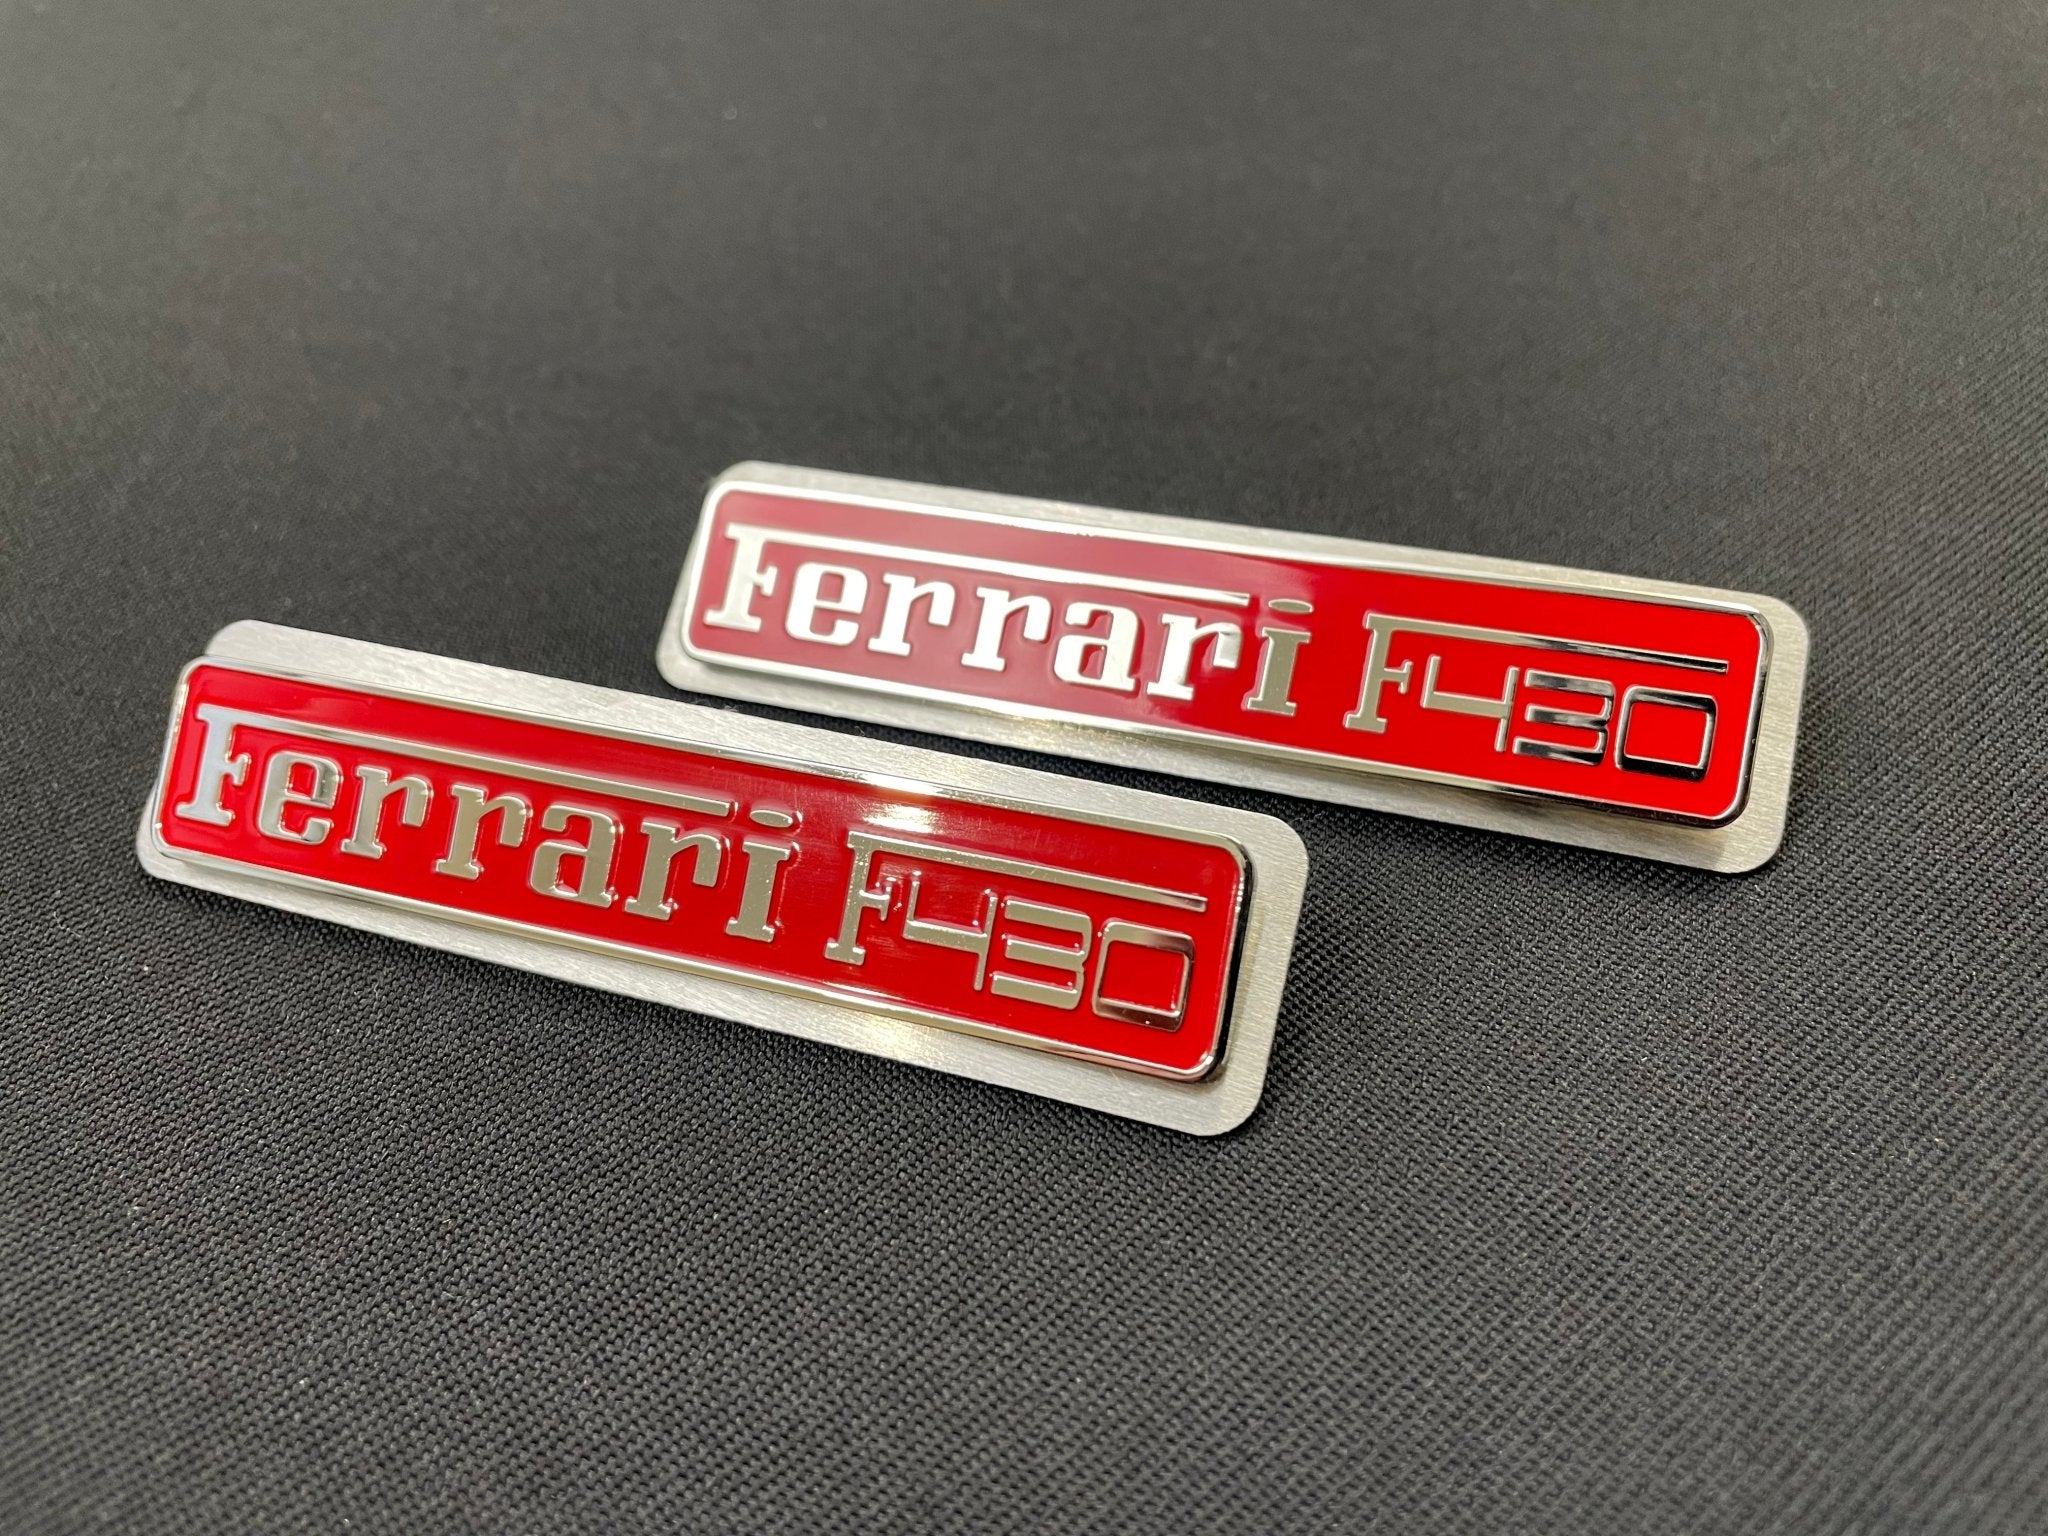 Ferrari F430 Floor Mats Interior Red Insertion Badges Emblems Metal Chrome Polished qualitative 2 pcs Set